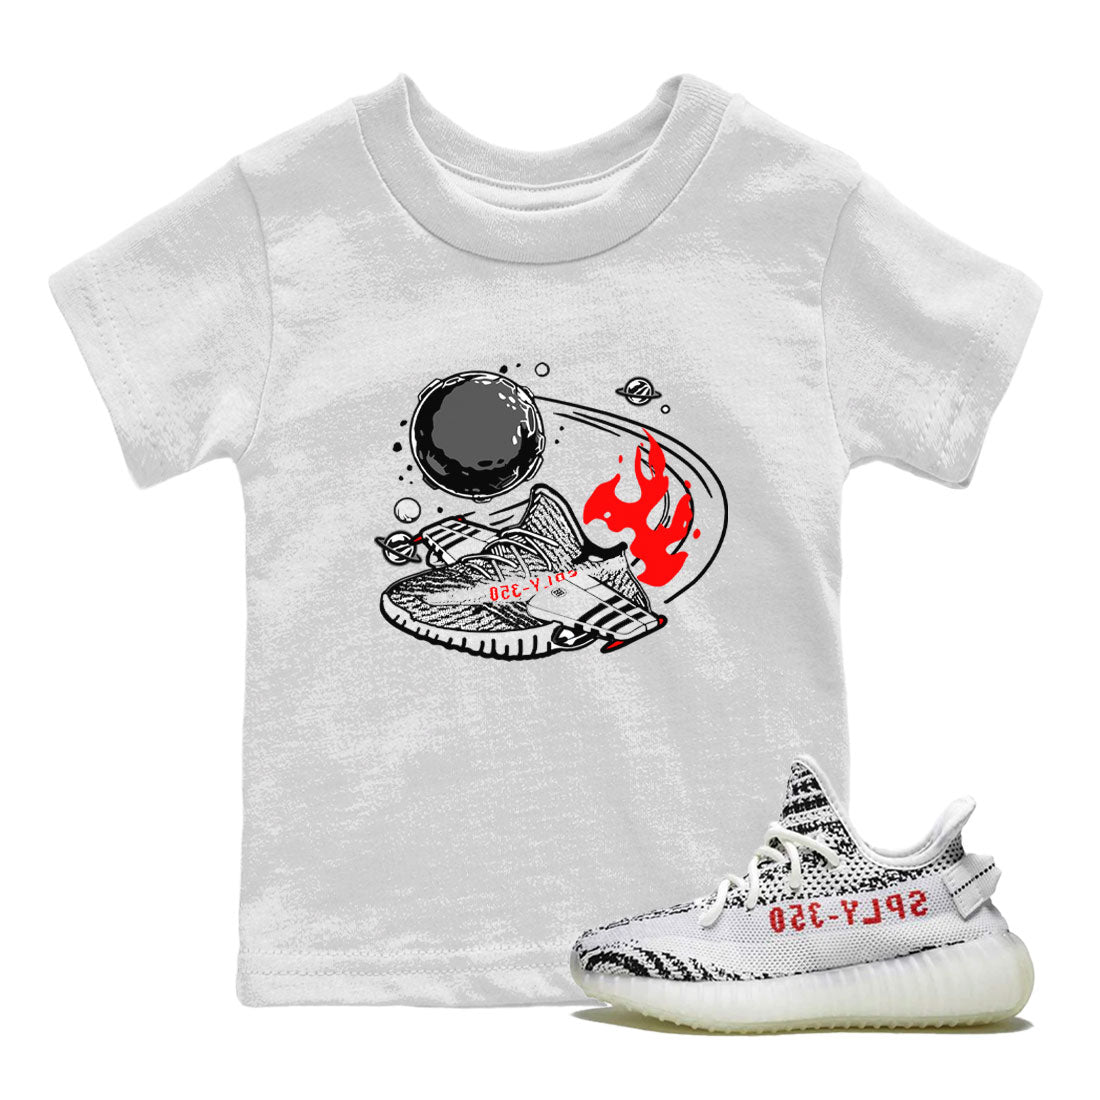 Yeezy 350 Zebra shirt to match Yeezys Rocket Boost Streetwear Sneaker Shirt Yeezy Boost 350 V2 Zebra Drip Gear Zone Sneaker Matching Clothing Baby Toddler White 1 T-Shirt